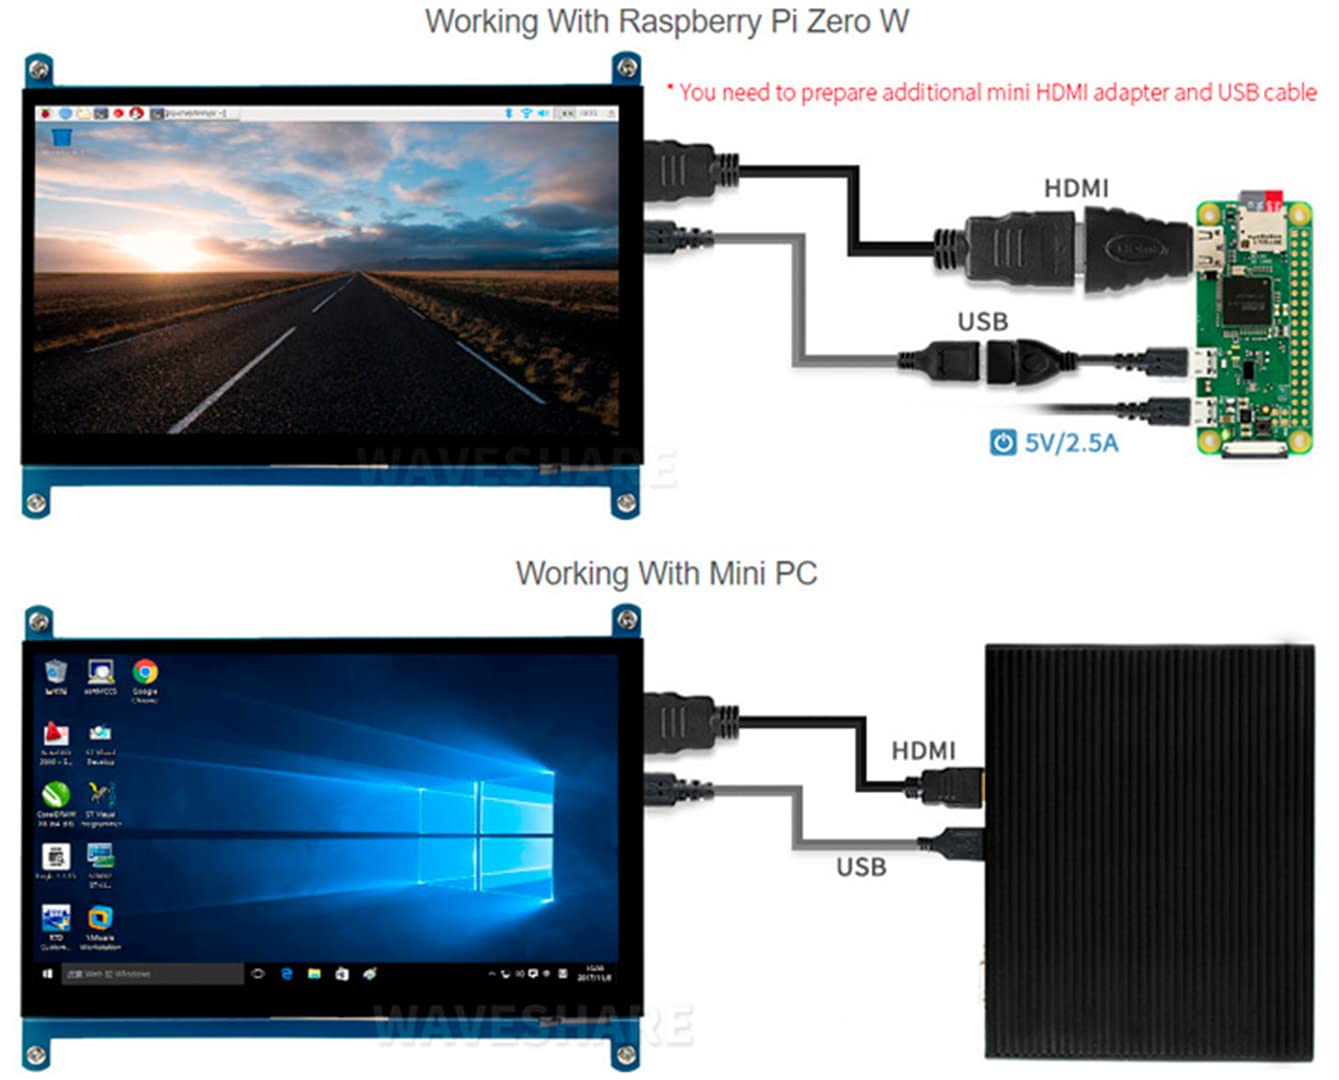 waveshare 7inch HDMI LCD IPS Capacitive Touch Screen 1024×600 Display Monitor for All Rev Raspberry Pi 4B/3B+/3B/2B/B+/A+/Zero,BeagleBone Black Windows 10/8.1/8/7